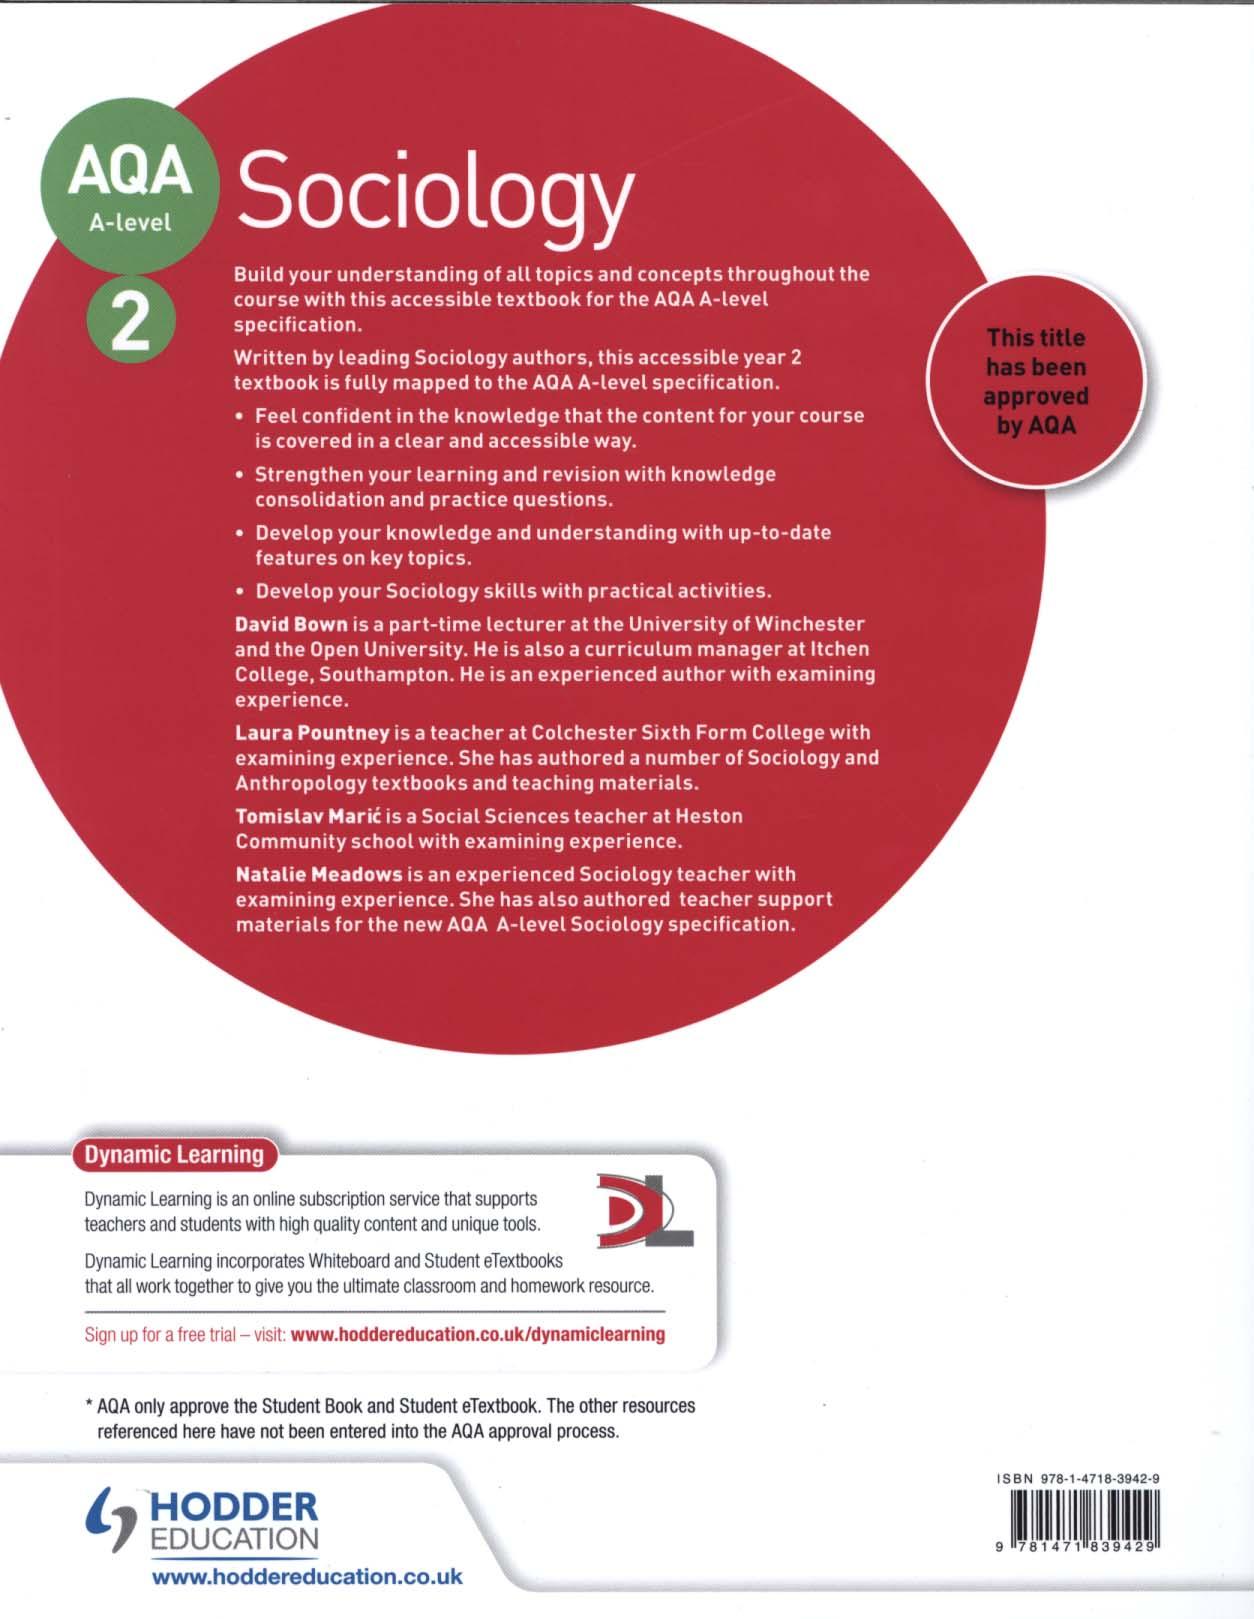 AQA Sociology for A Level